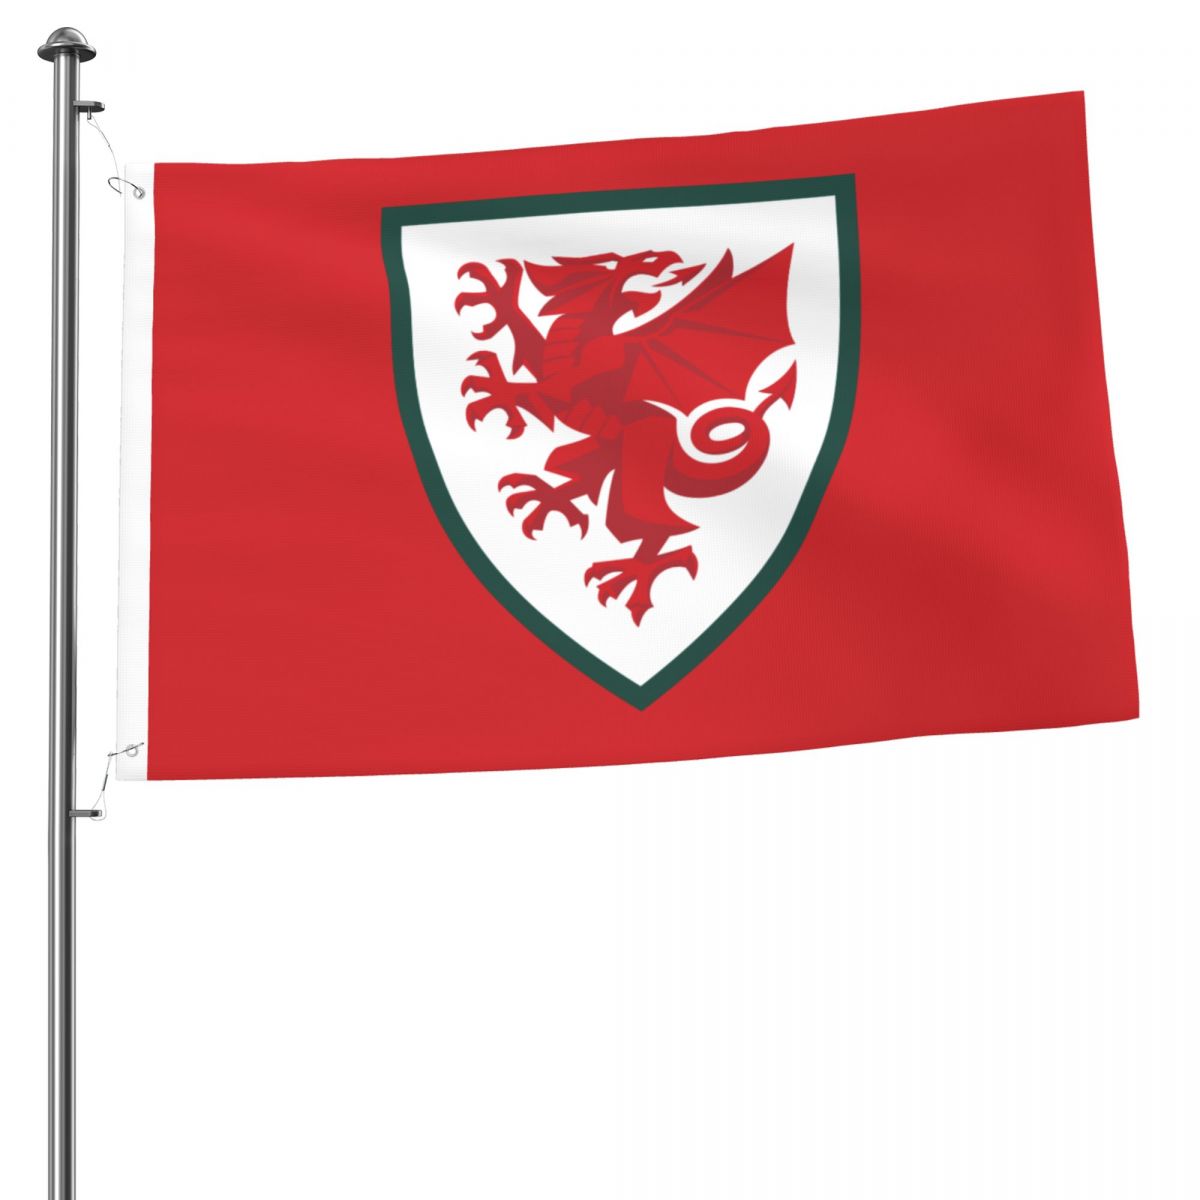 Wales National Football Team 2x3 FT UV Resistant Flag